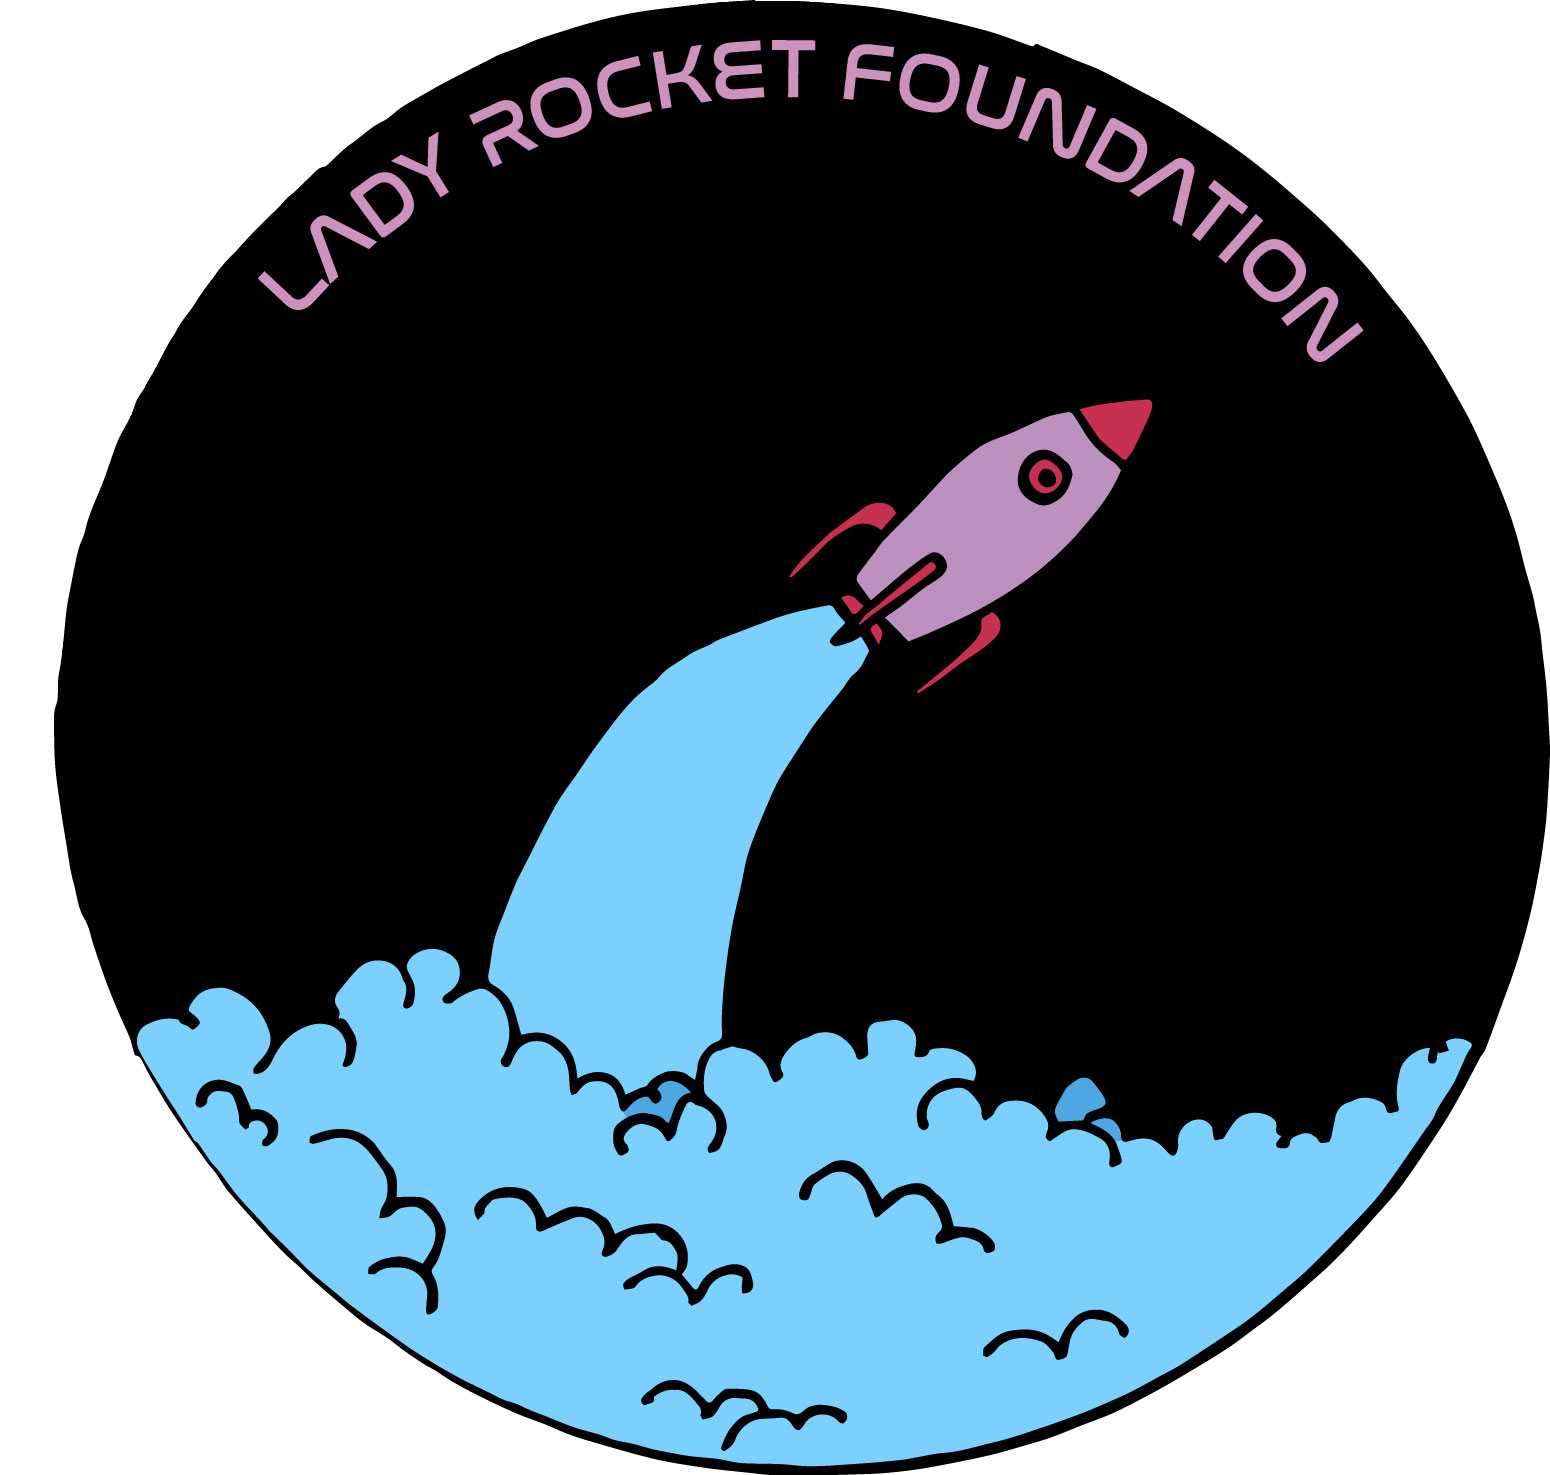 Lady Rocket Foundation logo